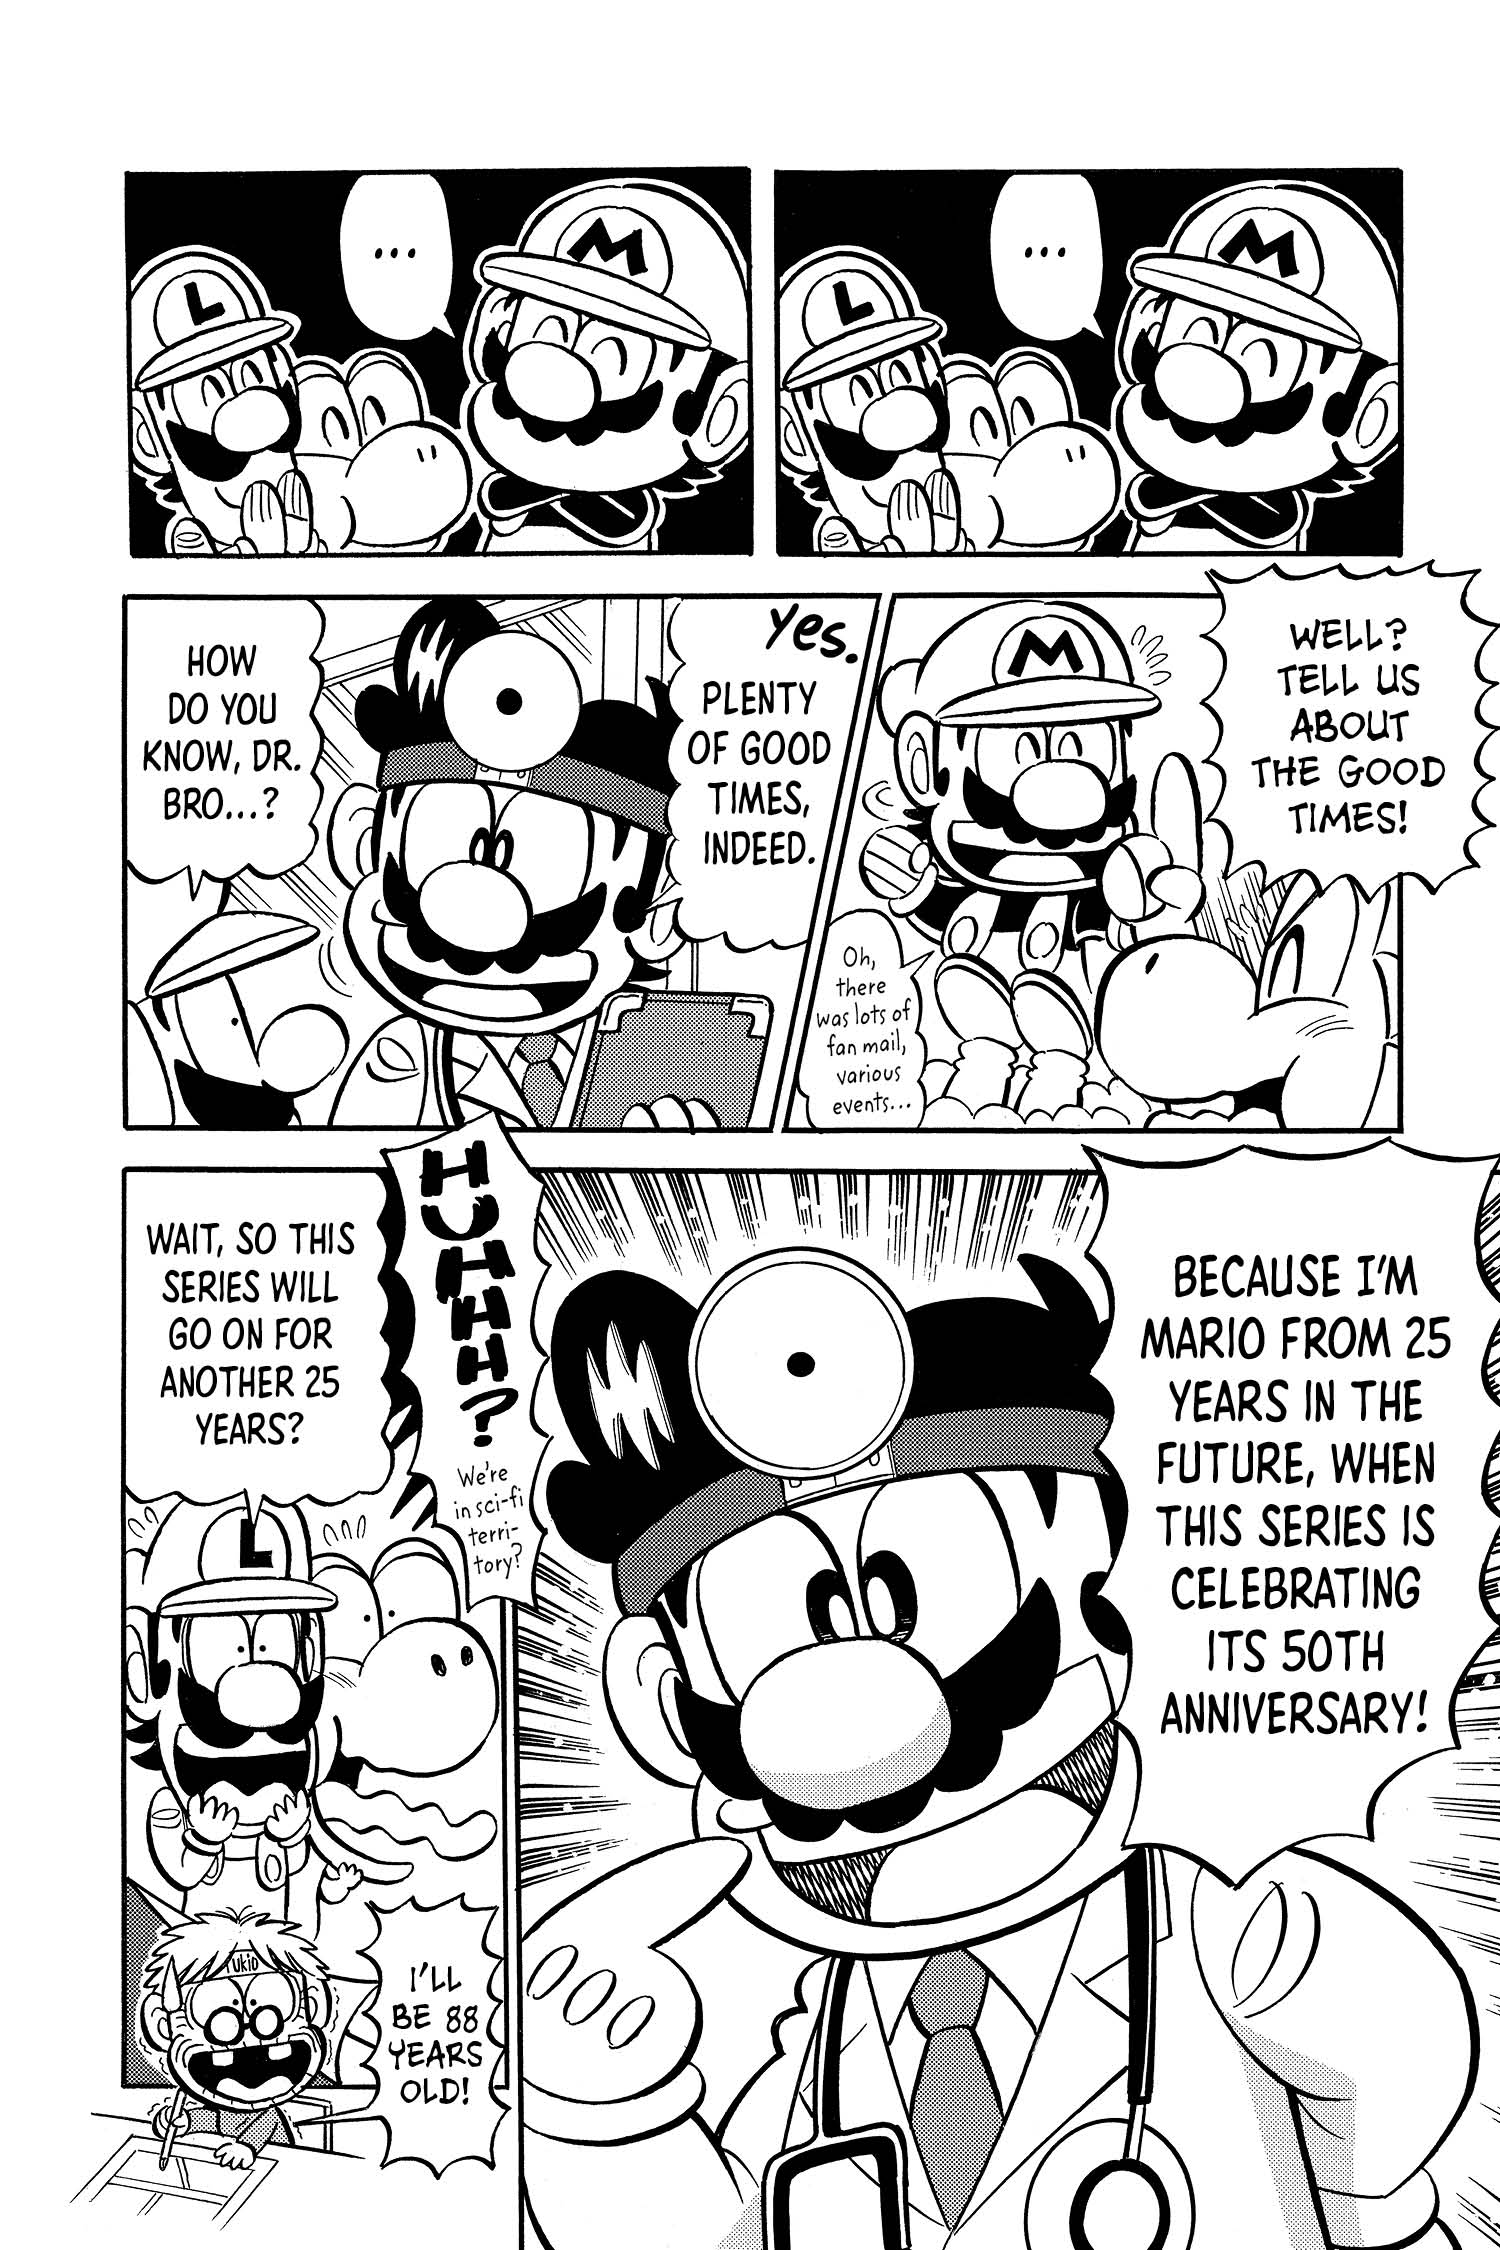 Mario and Luigi meeting Dr. Mario. (Image: Viz Media)